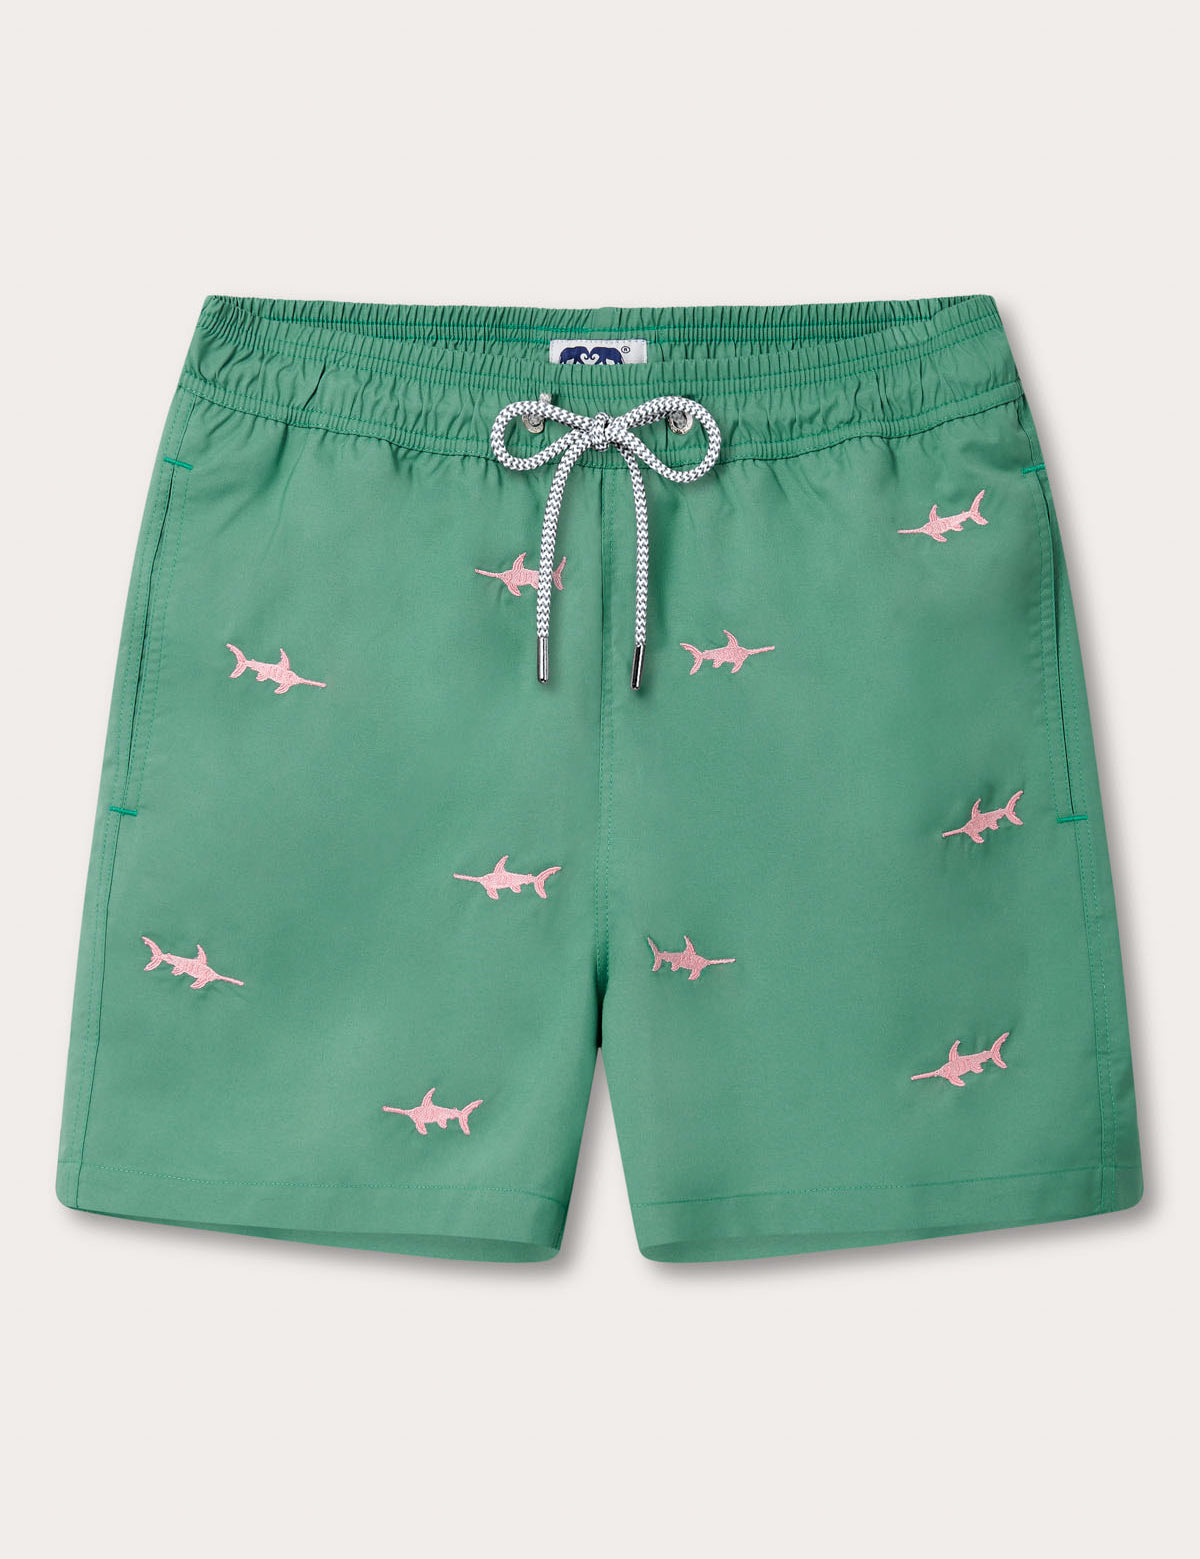 Men's Staniel Swim Shorts with pink swordfish motifs on green fabric.